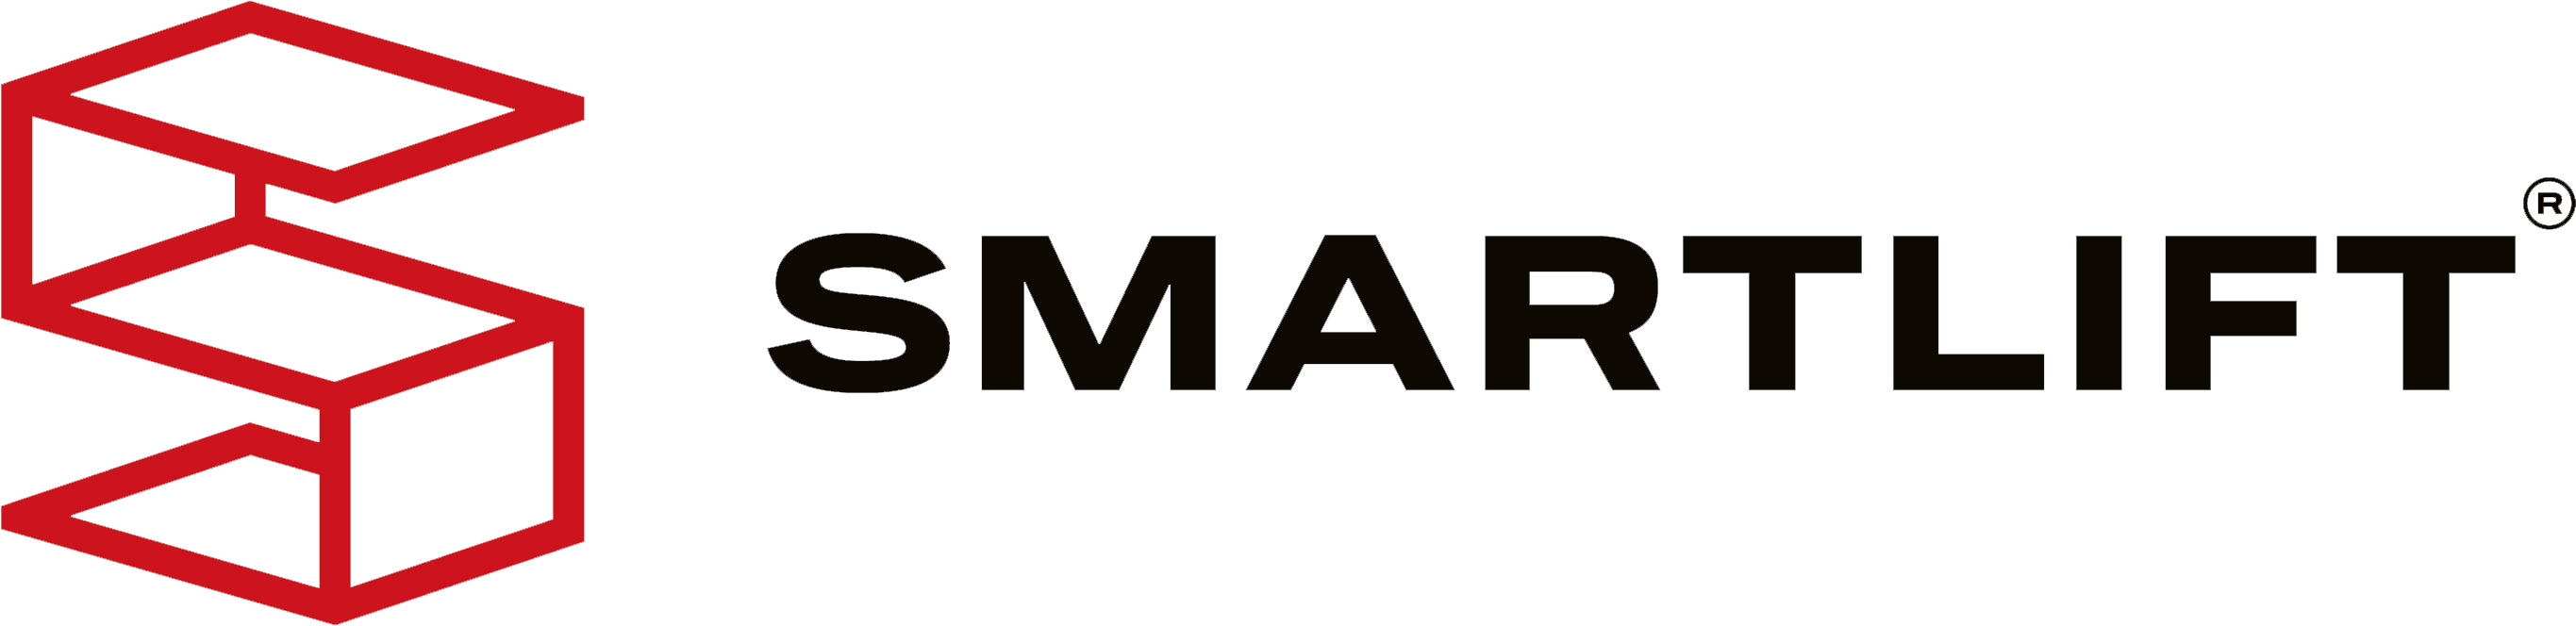 Smartlift_logo_trans